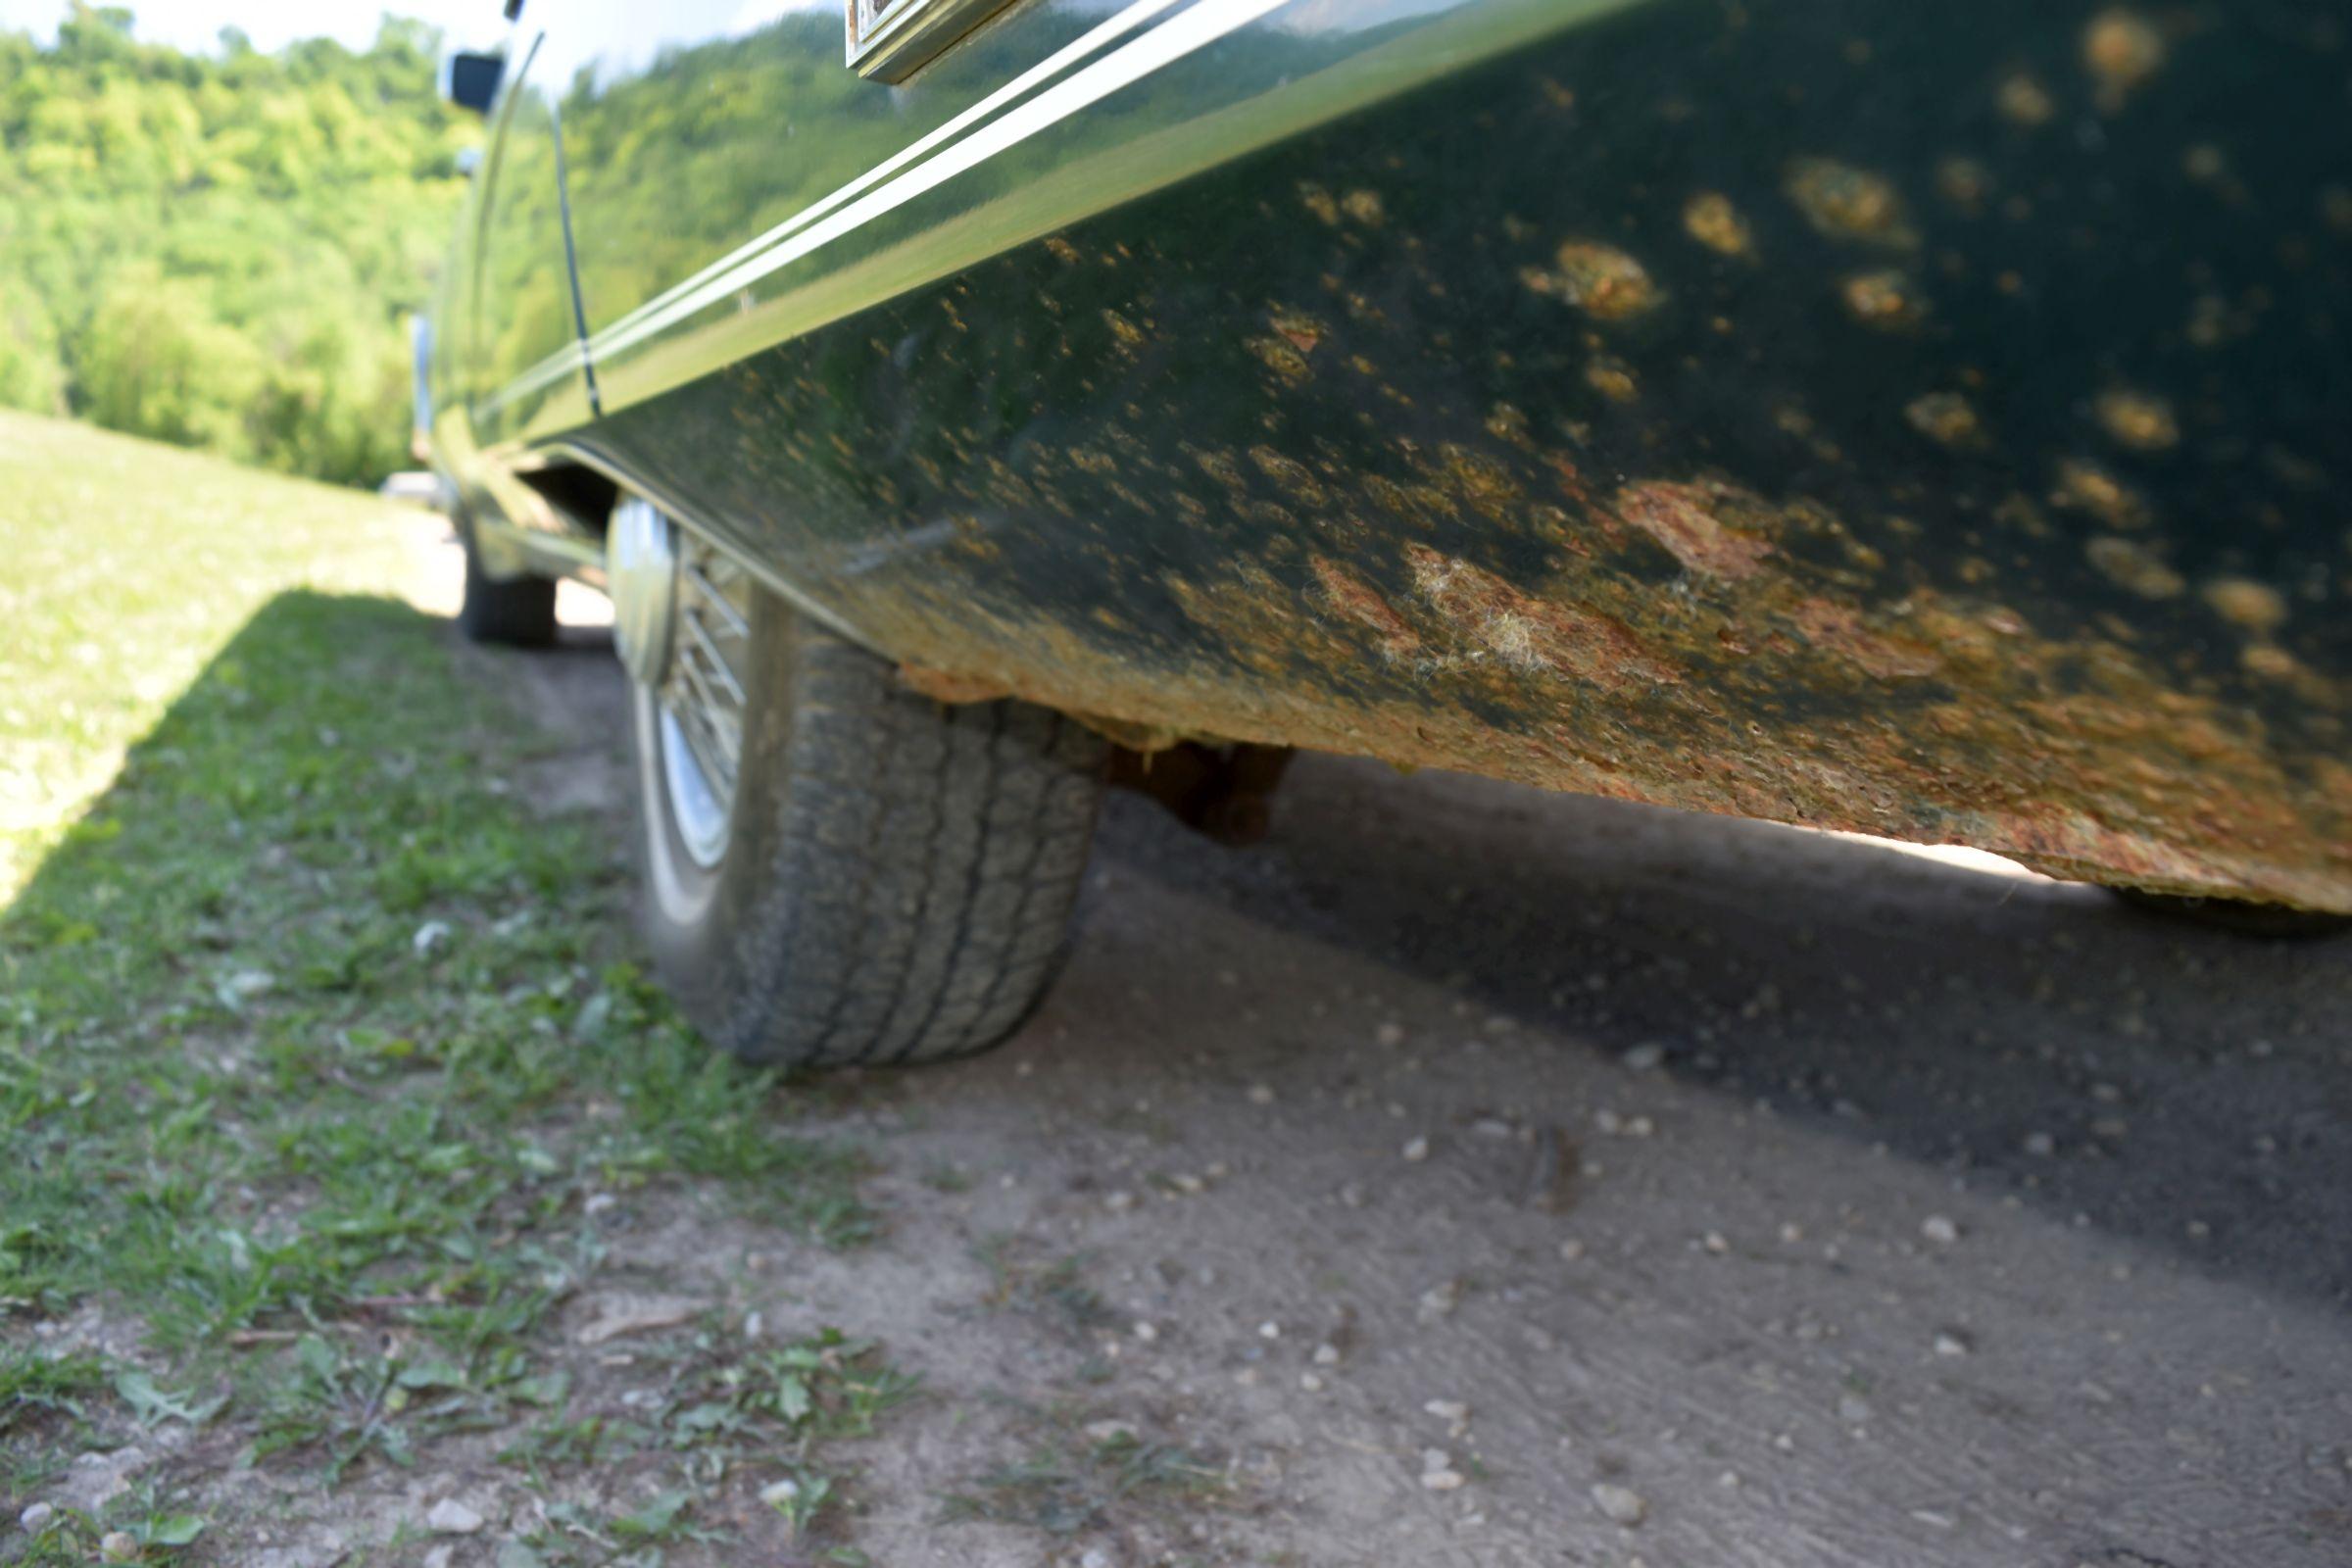 1978 Chrysler New Yorker 4 Door Car, 67,619 Original Miles, Green Leather Interior, 400ci Engine, Au